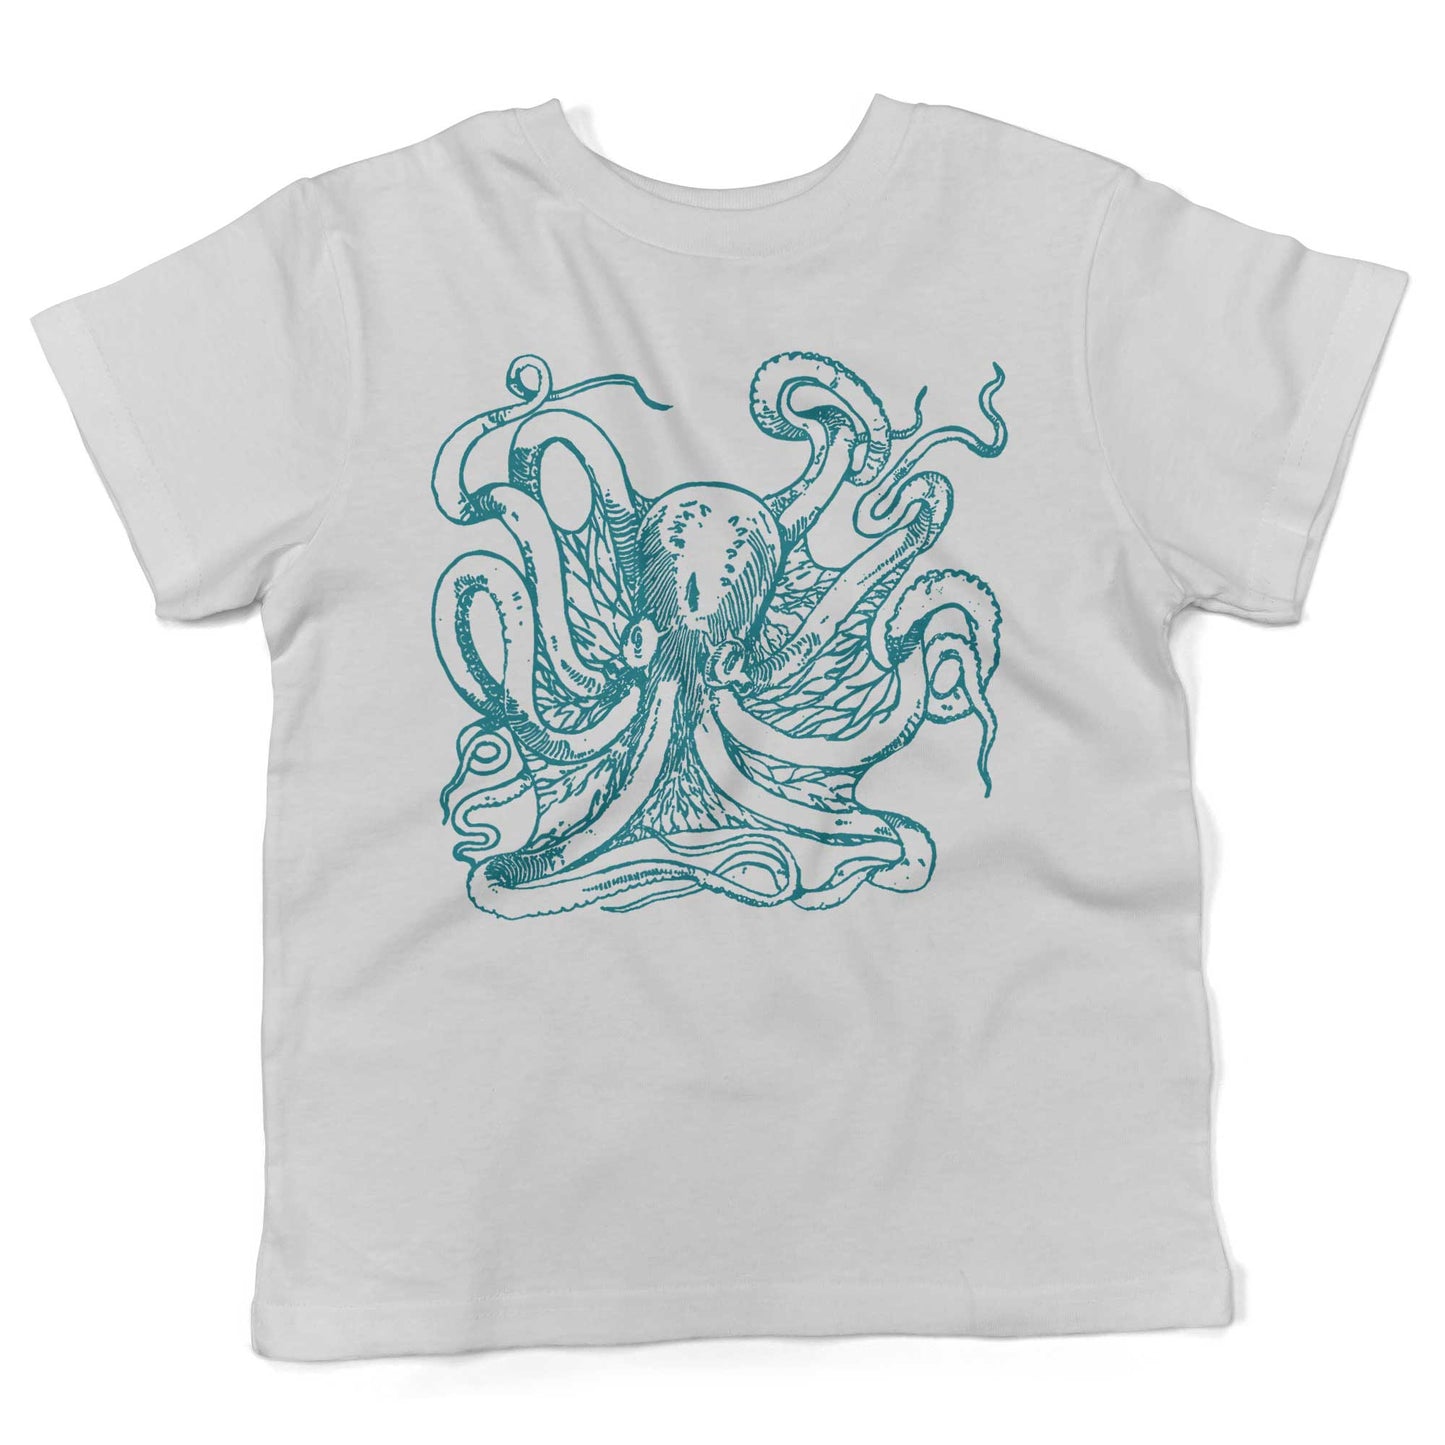 Giant Octopus Toddler Shirt-White-2T